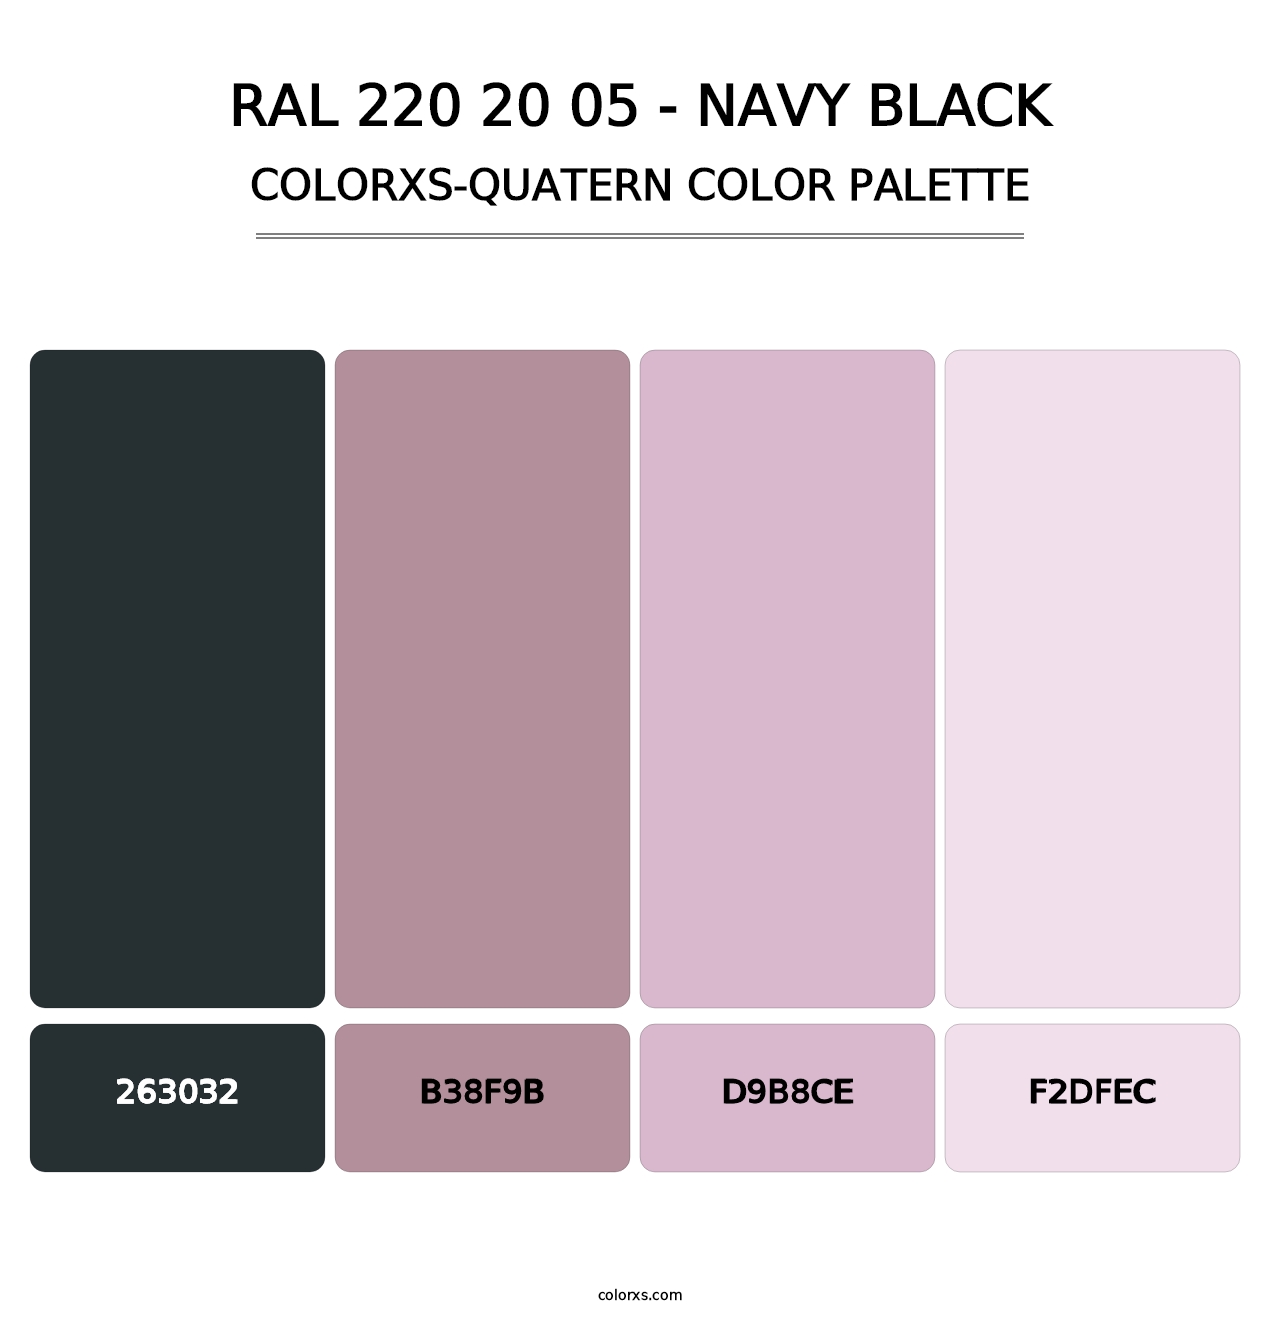 RAL 220 20 05 - Navy Black - Colorxs Quatern Palette